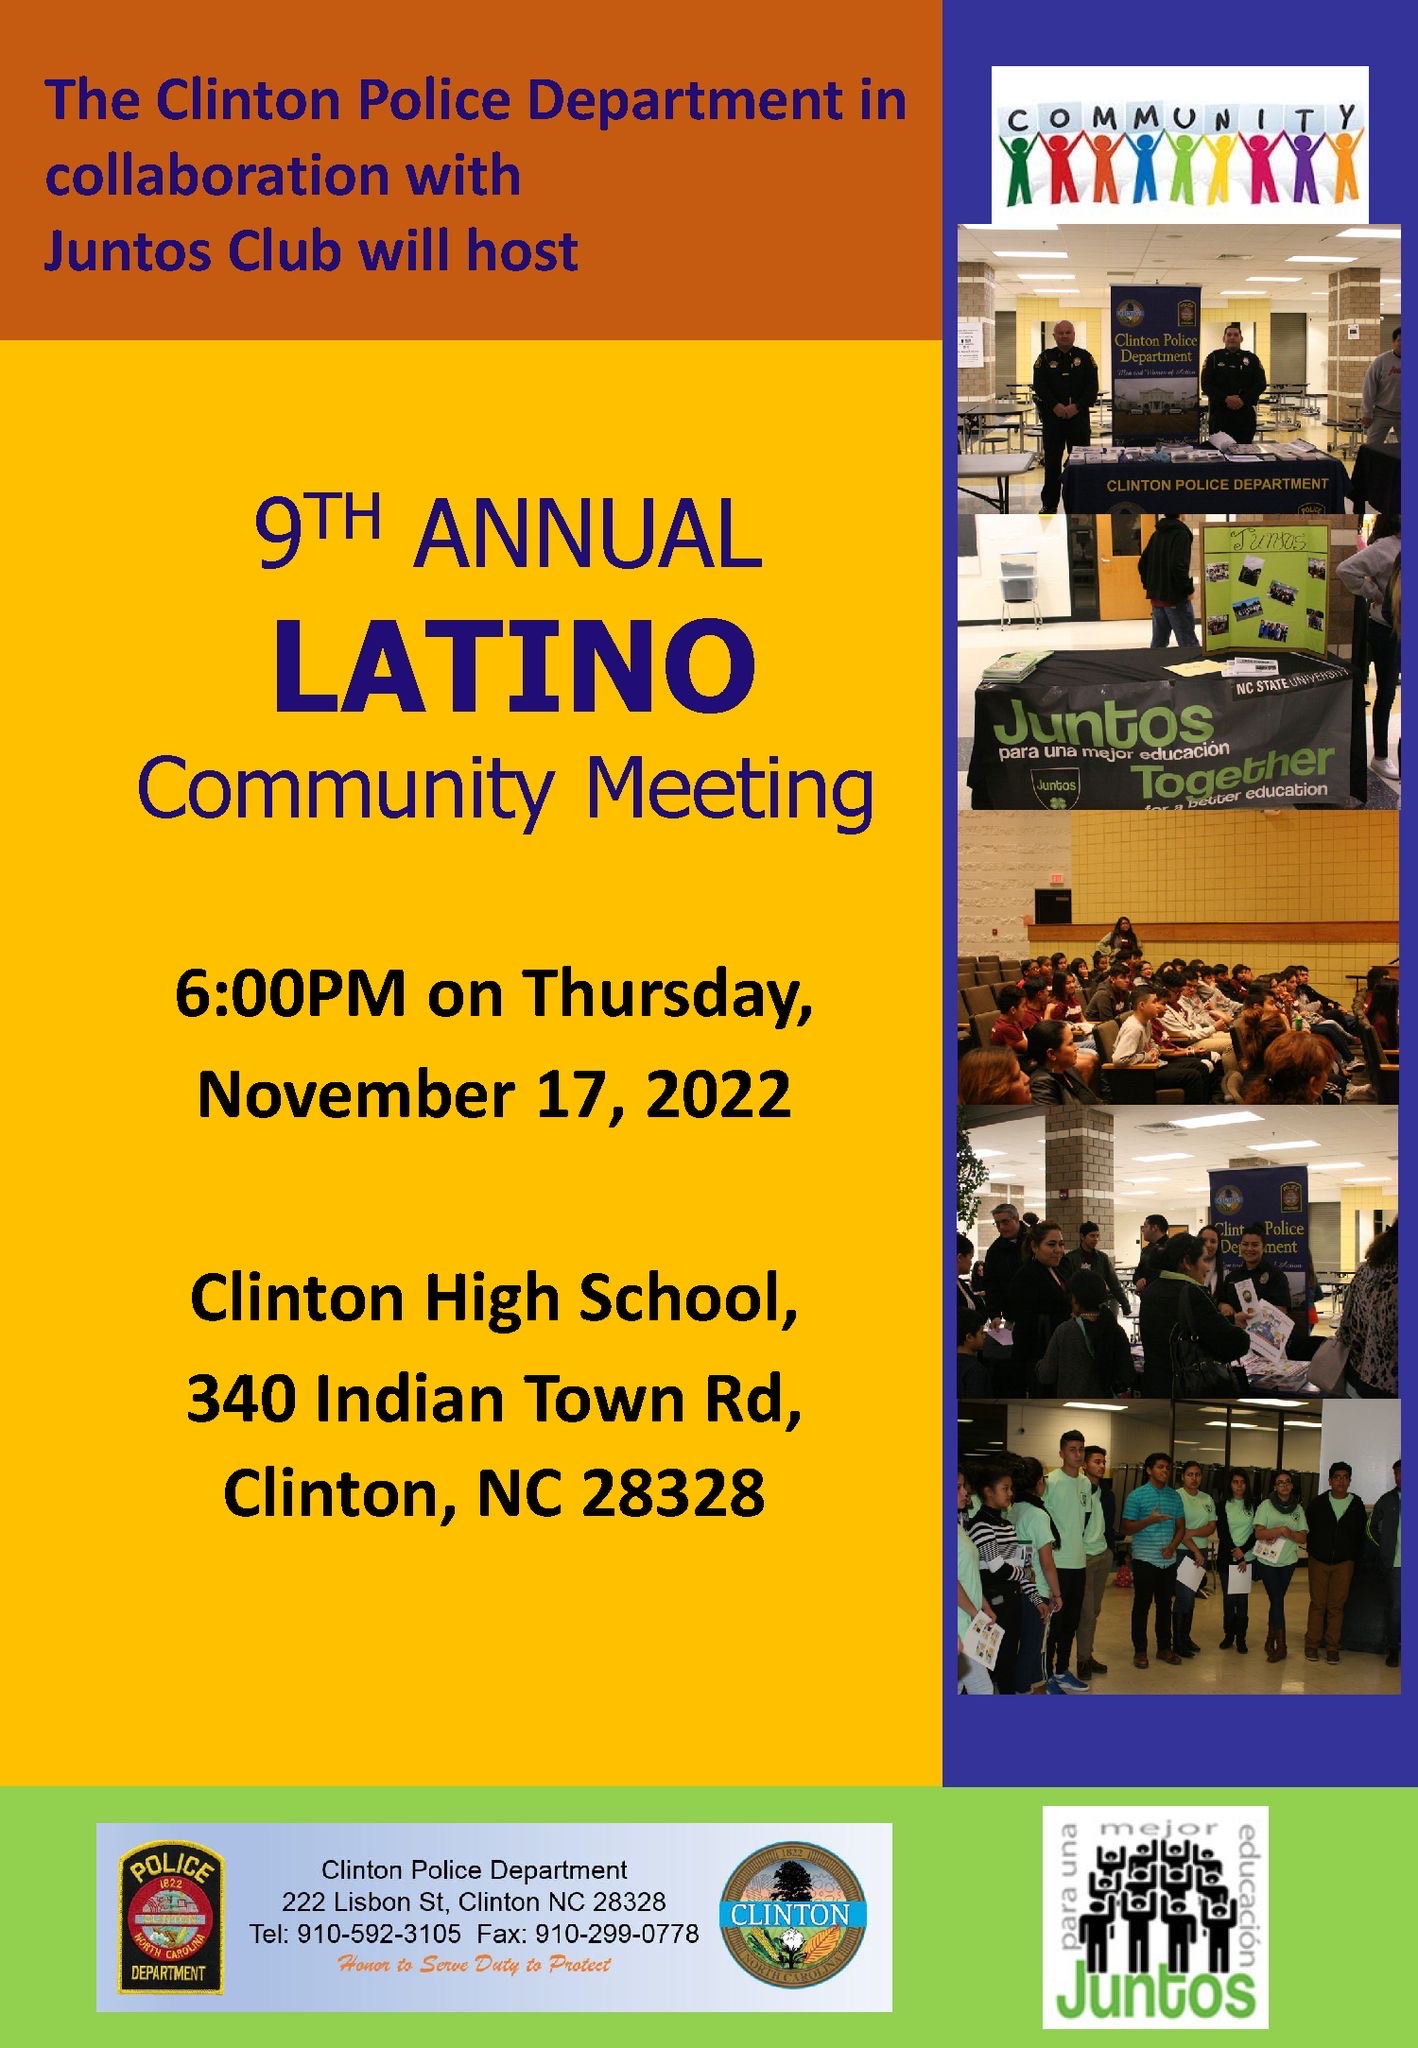 the 9th annual Latino community meeting 6:00 pm thursday Novemeber 17th 2022 